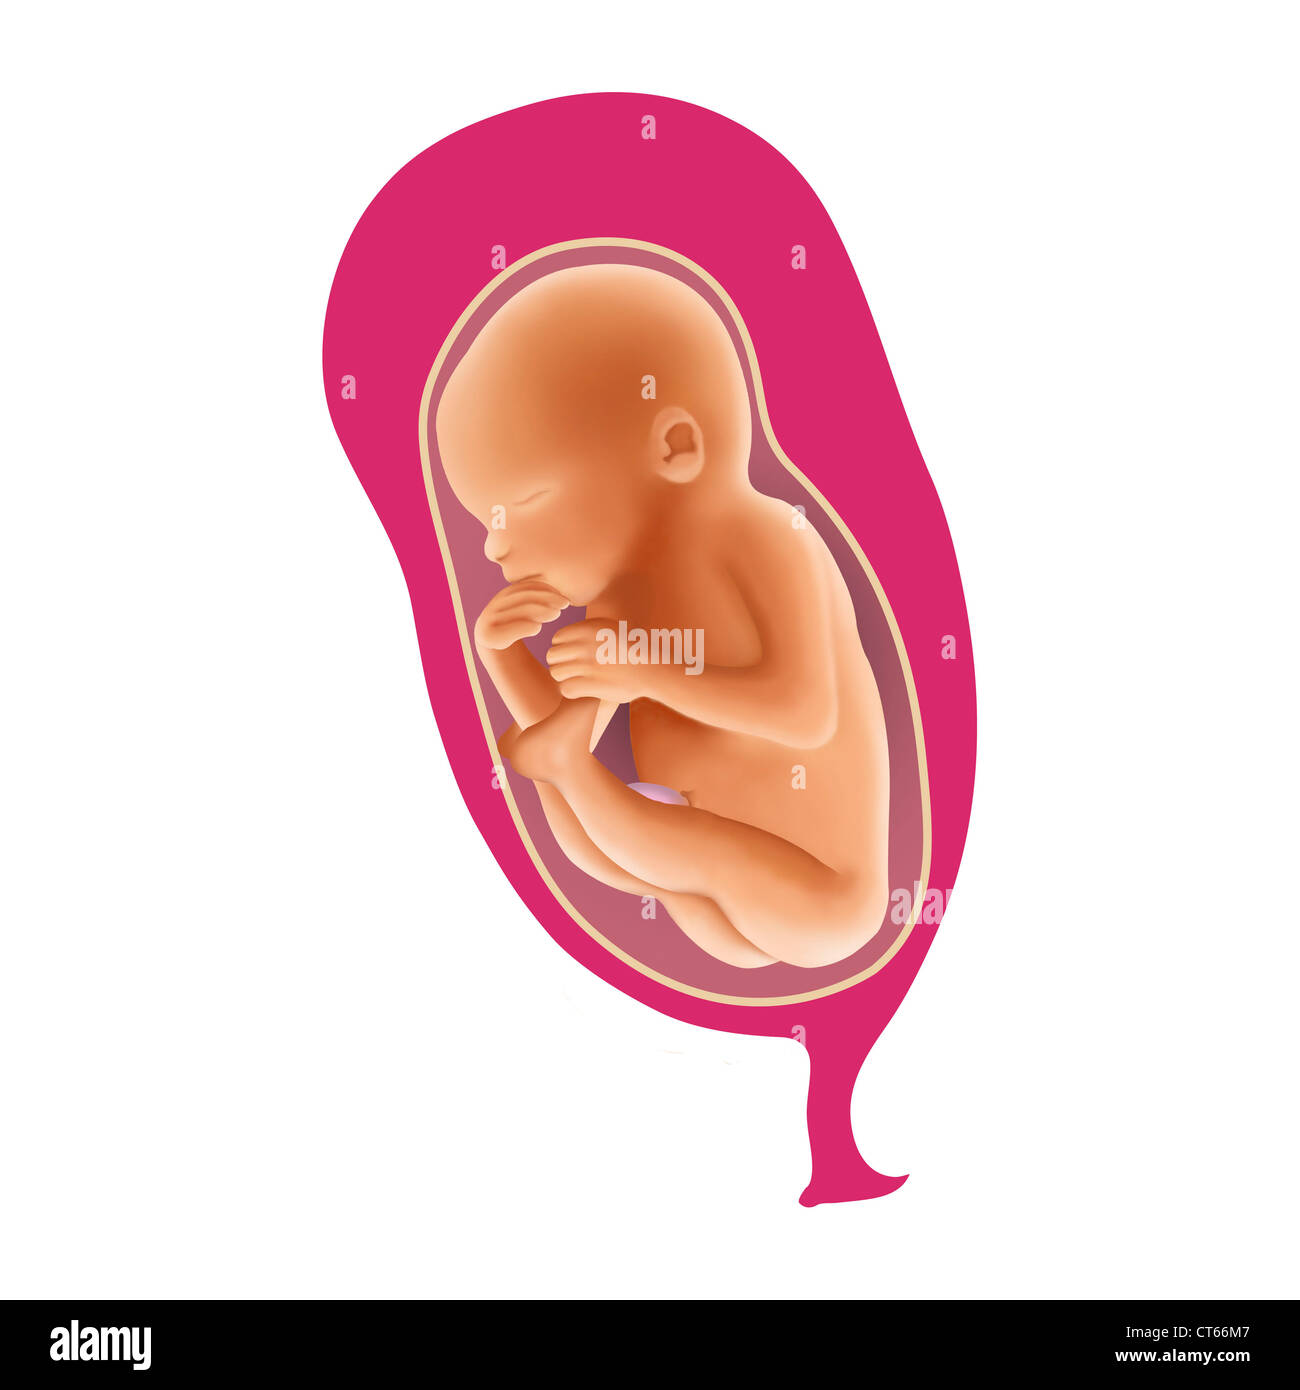 Fetal position Cut Out Stock Images & Pictures - Alamy